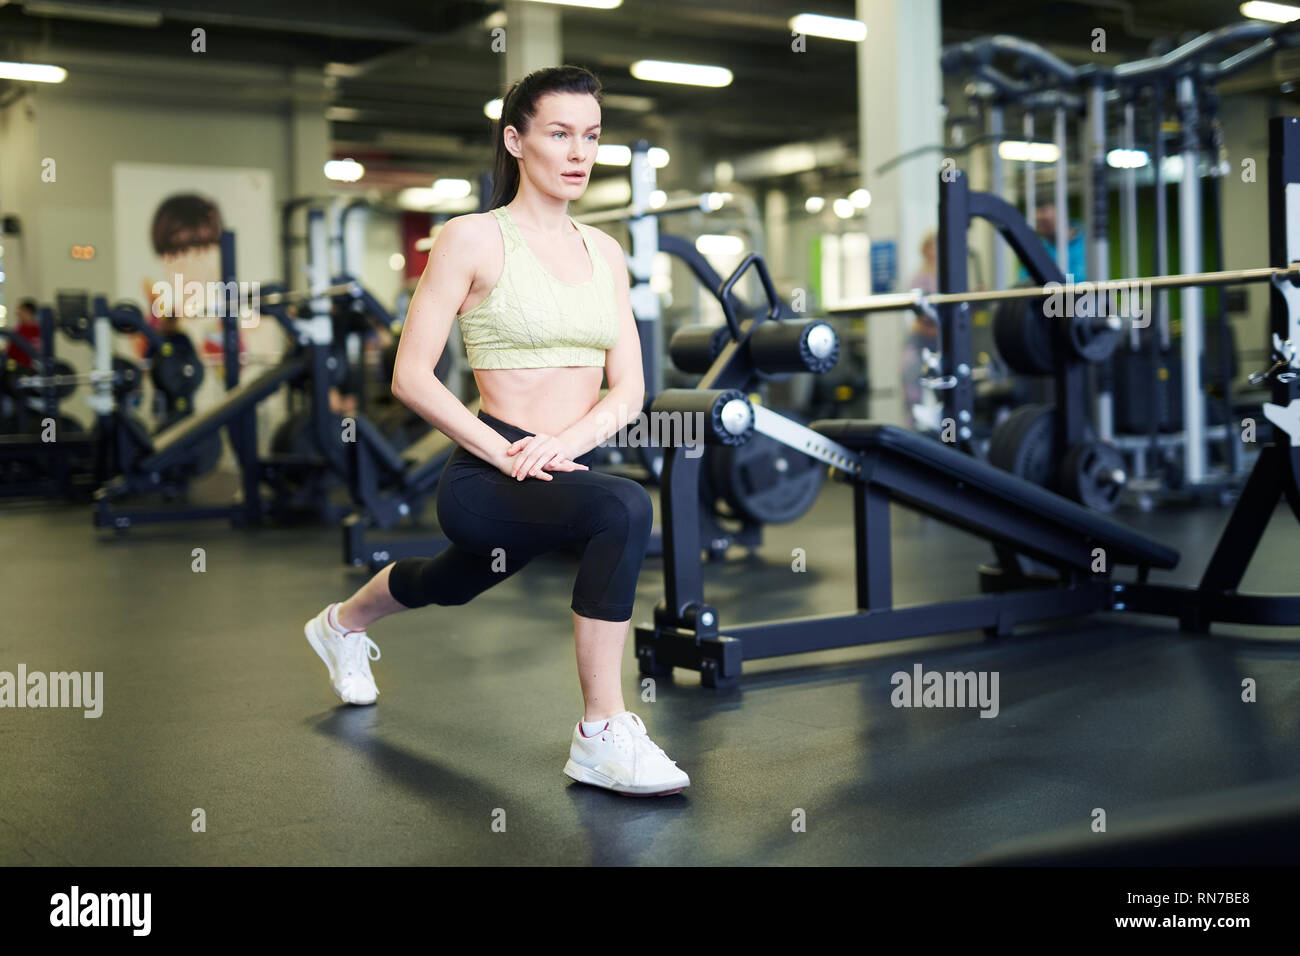 Exercising in leisure center Stock Photo